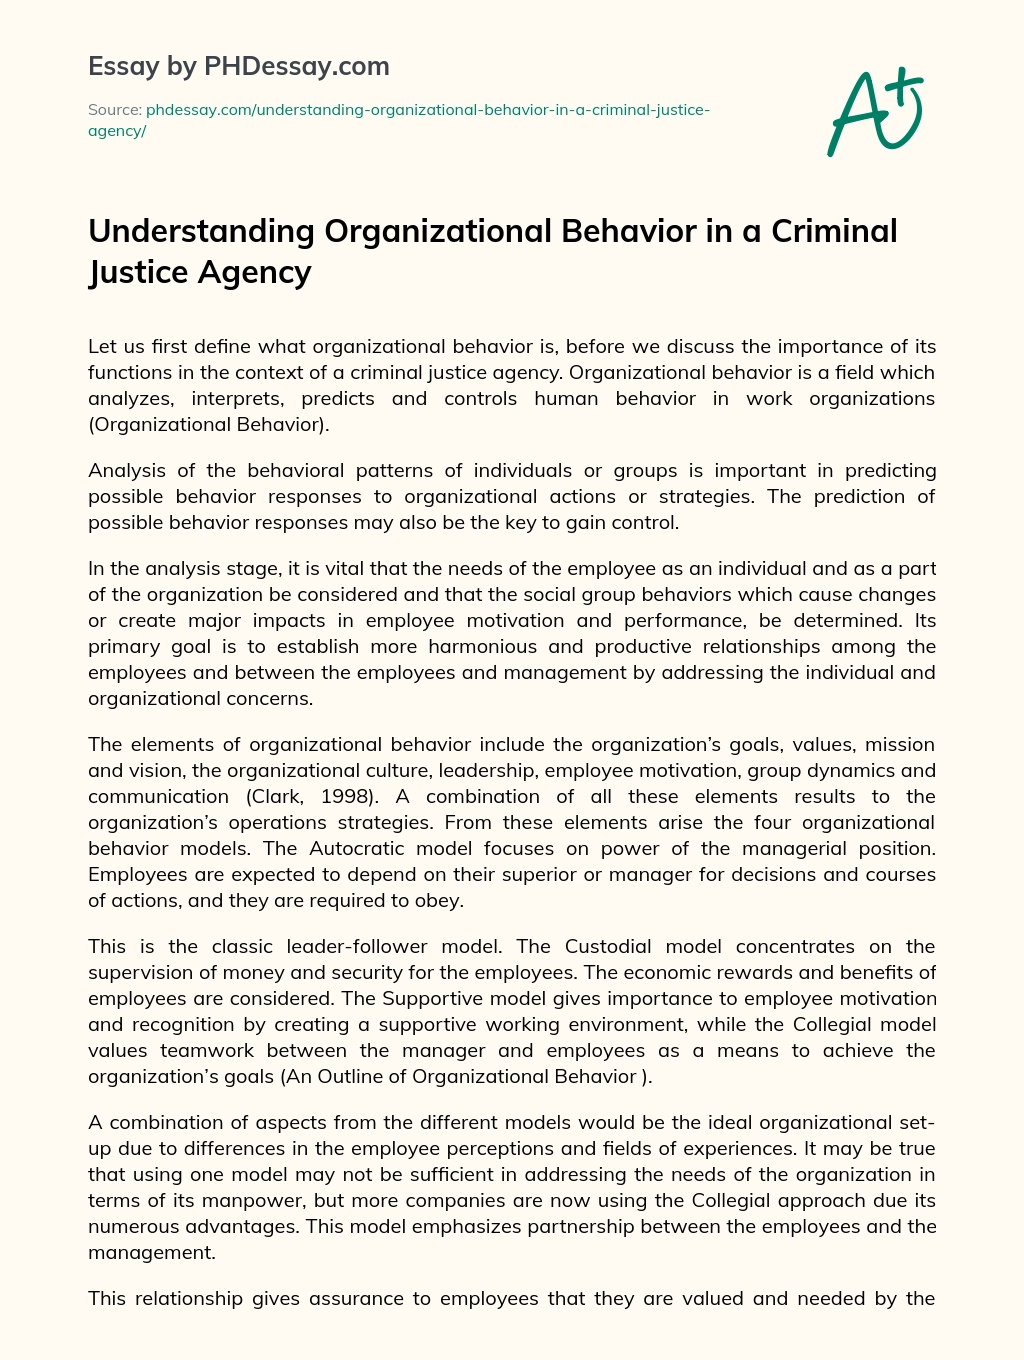 Understanding Organizational Behavior in a  Criminal Justice Agency essay